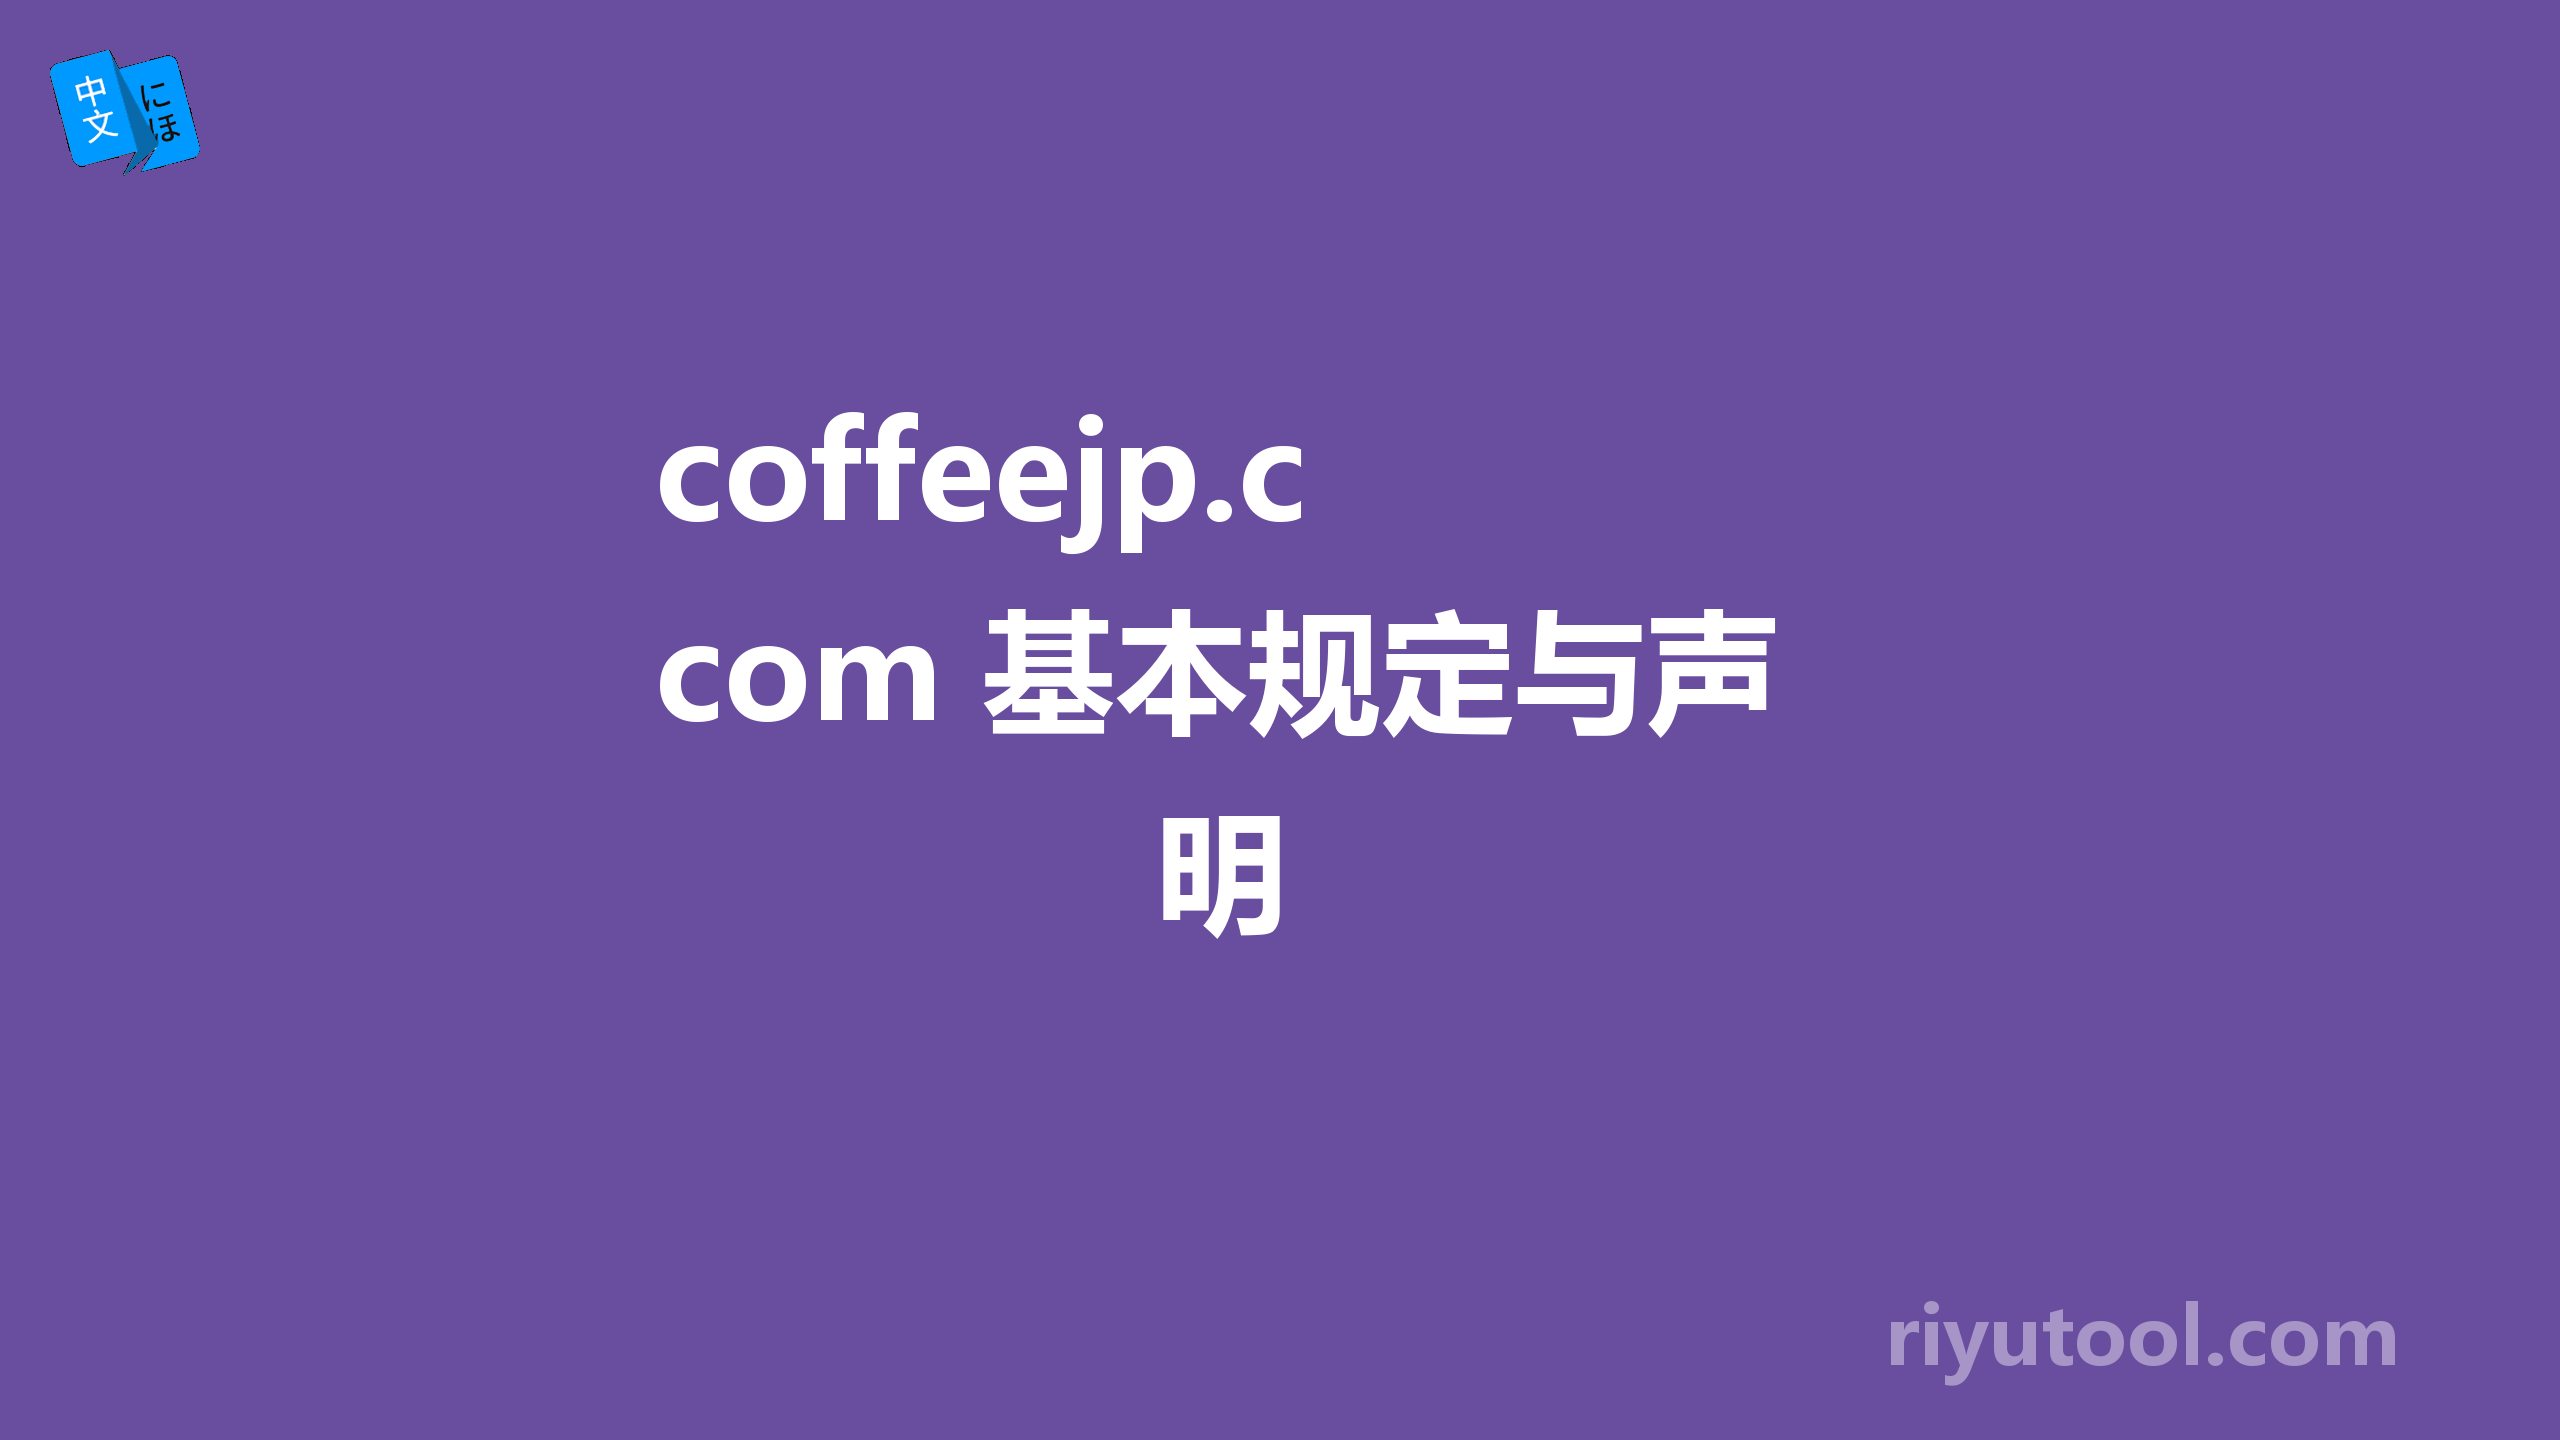 coffeejp.com 基本规定与声明 